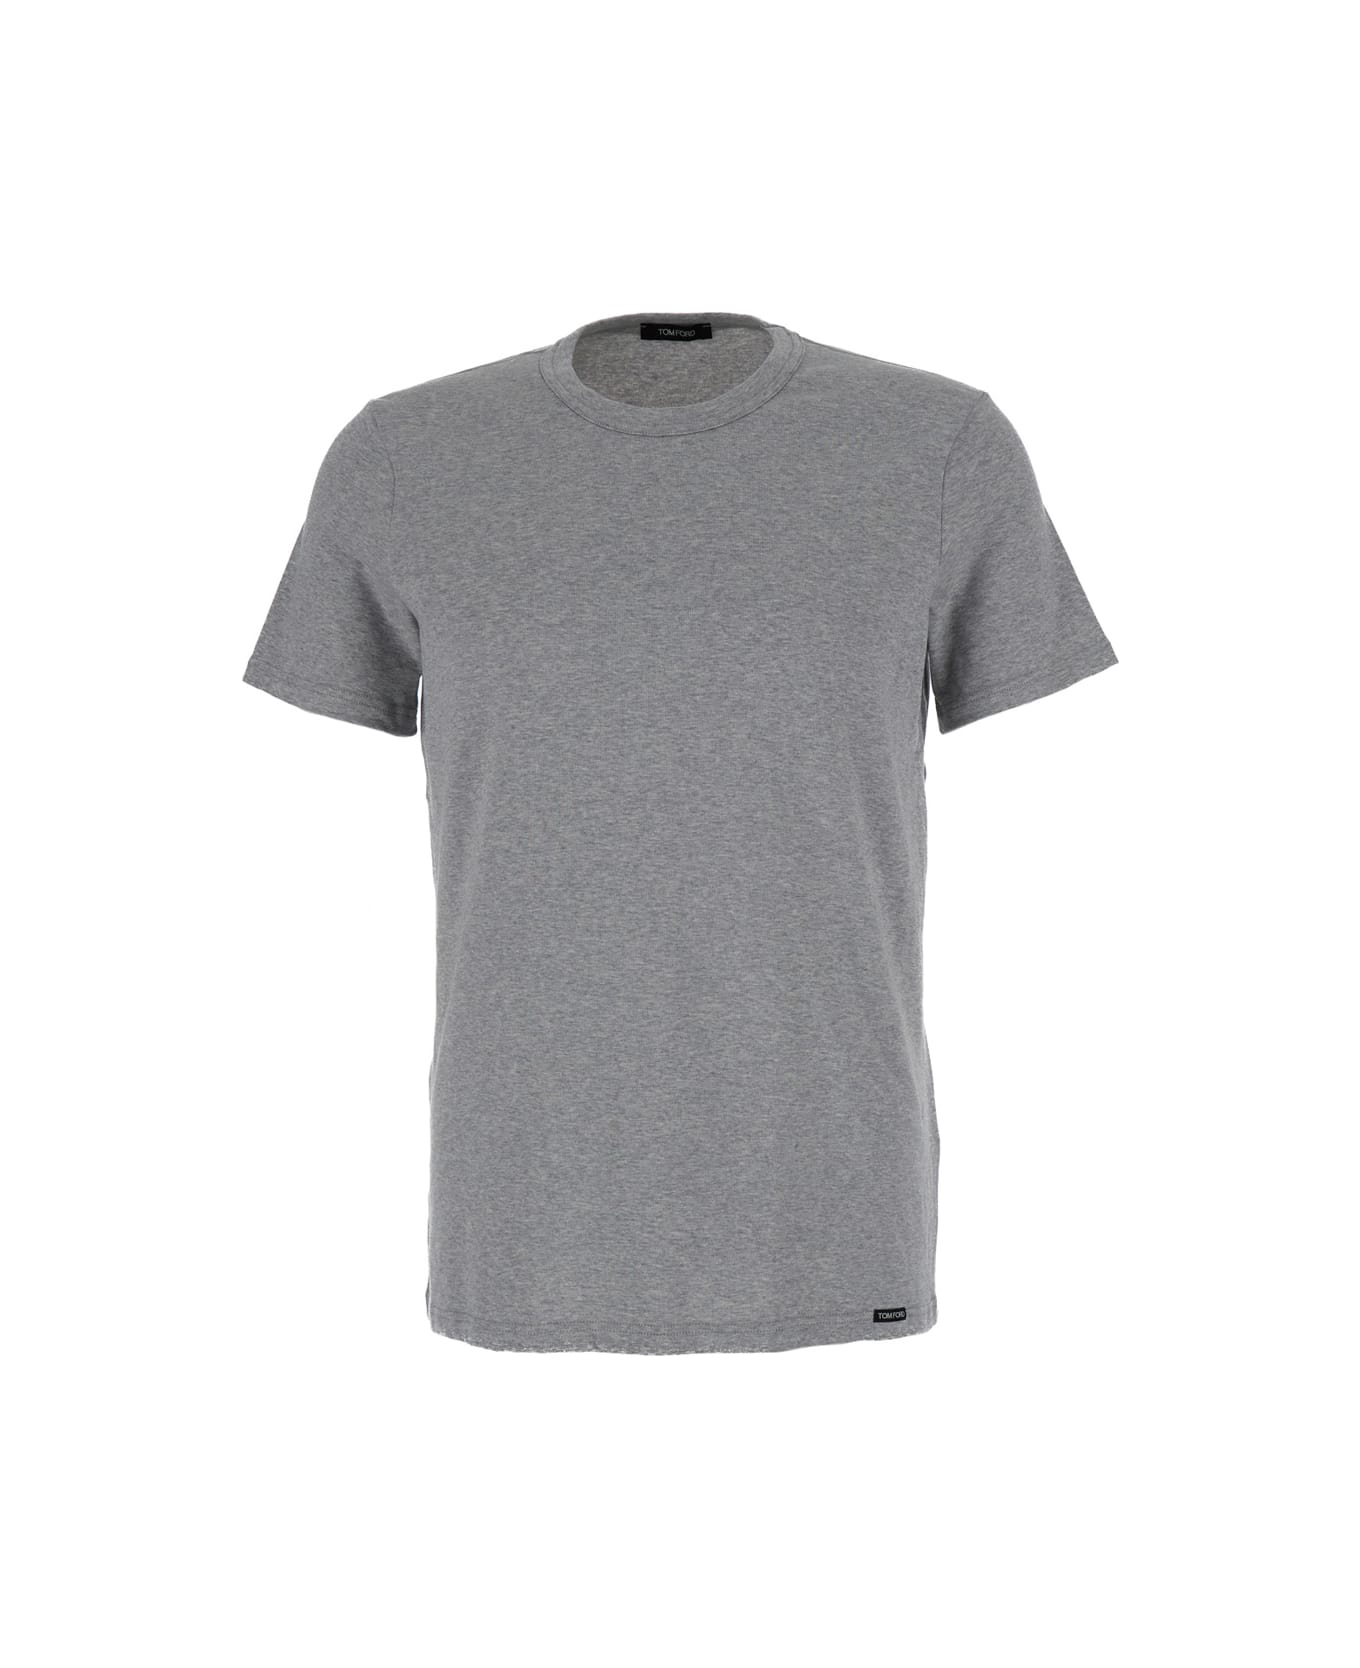 Tom Ford T-shirt Crew - Grey